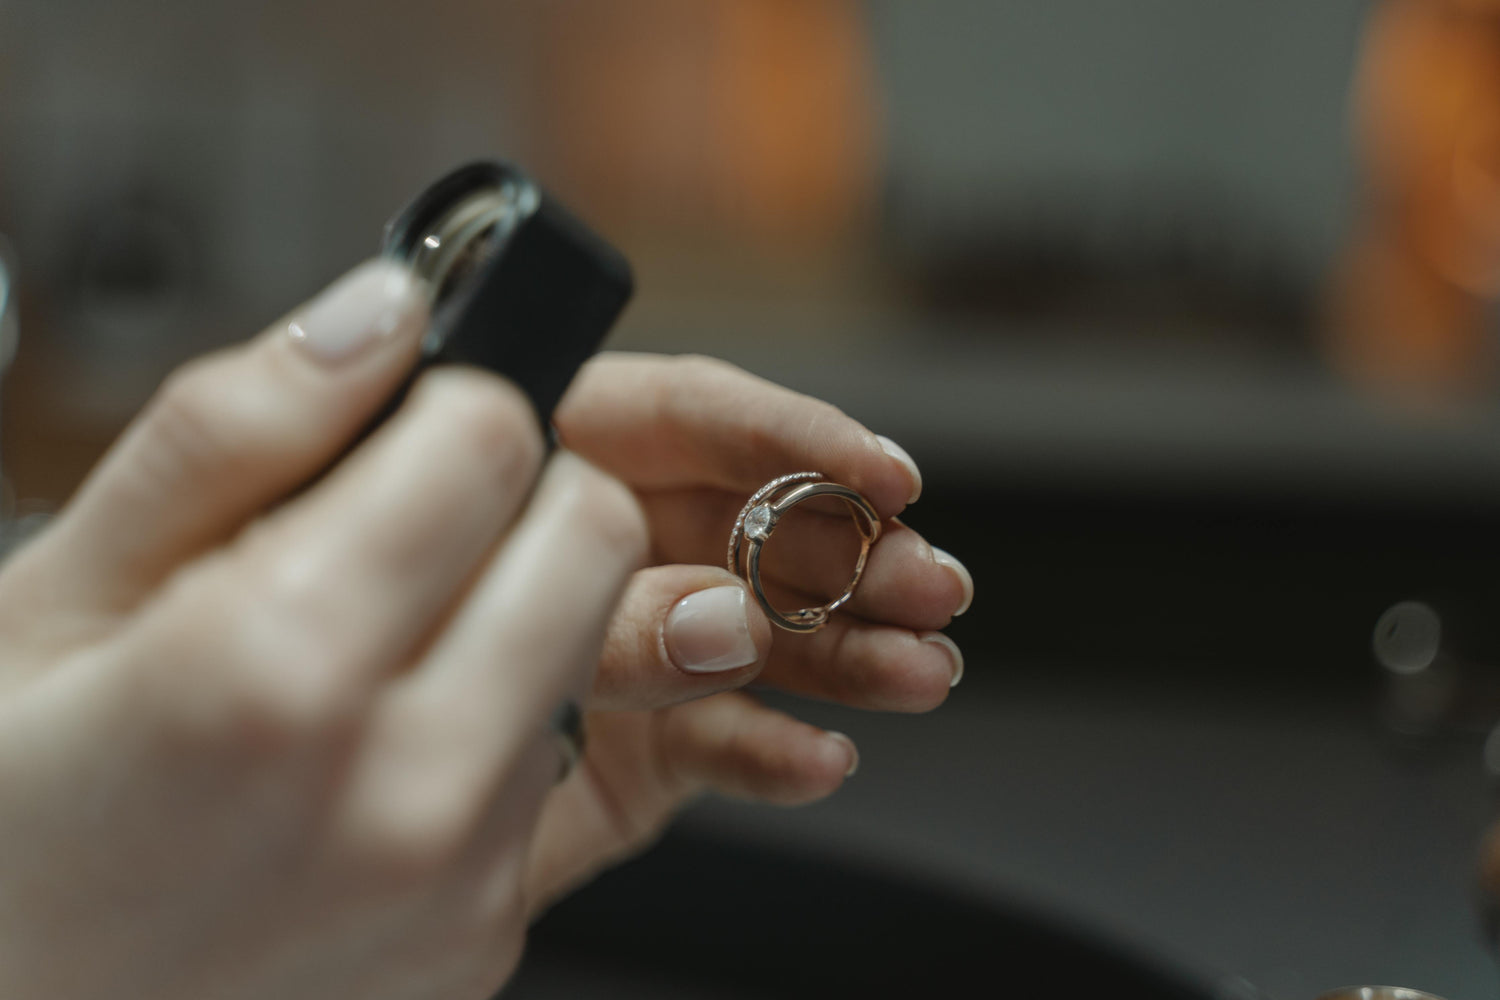 An individual examining a diamond ring through a gemstone loupe